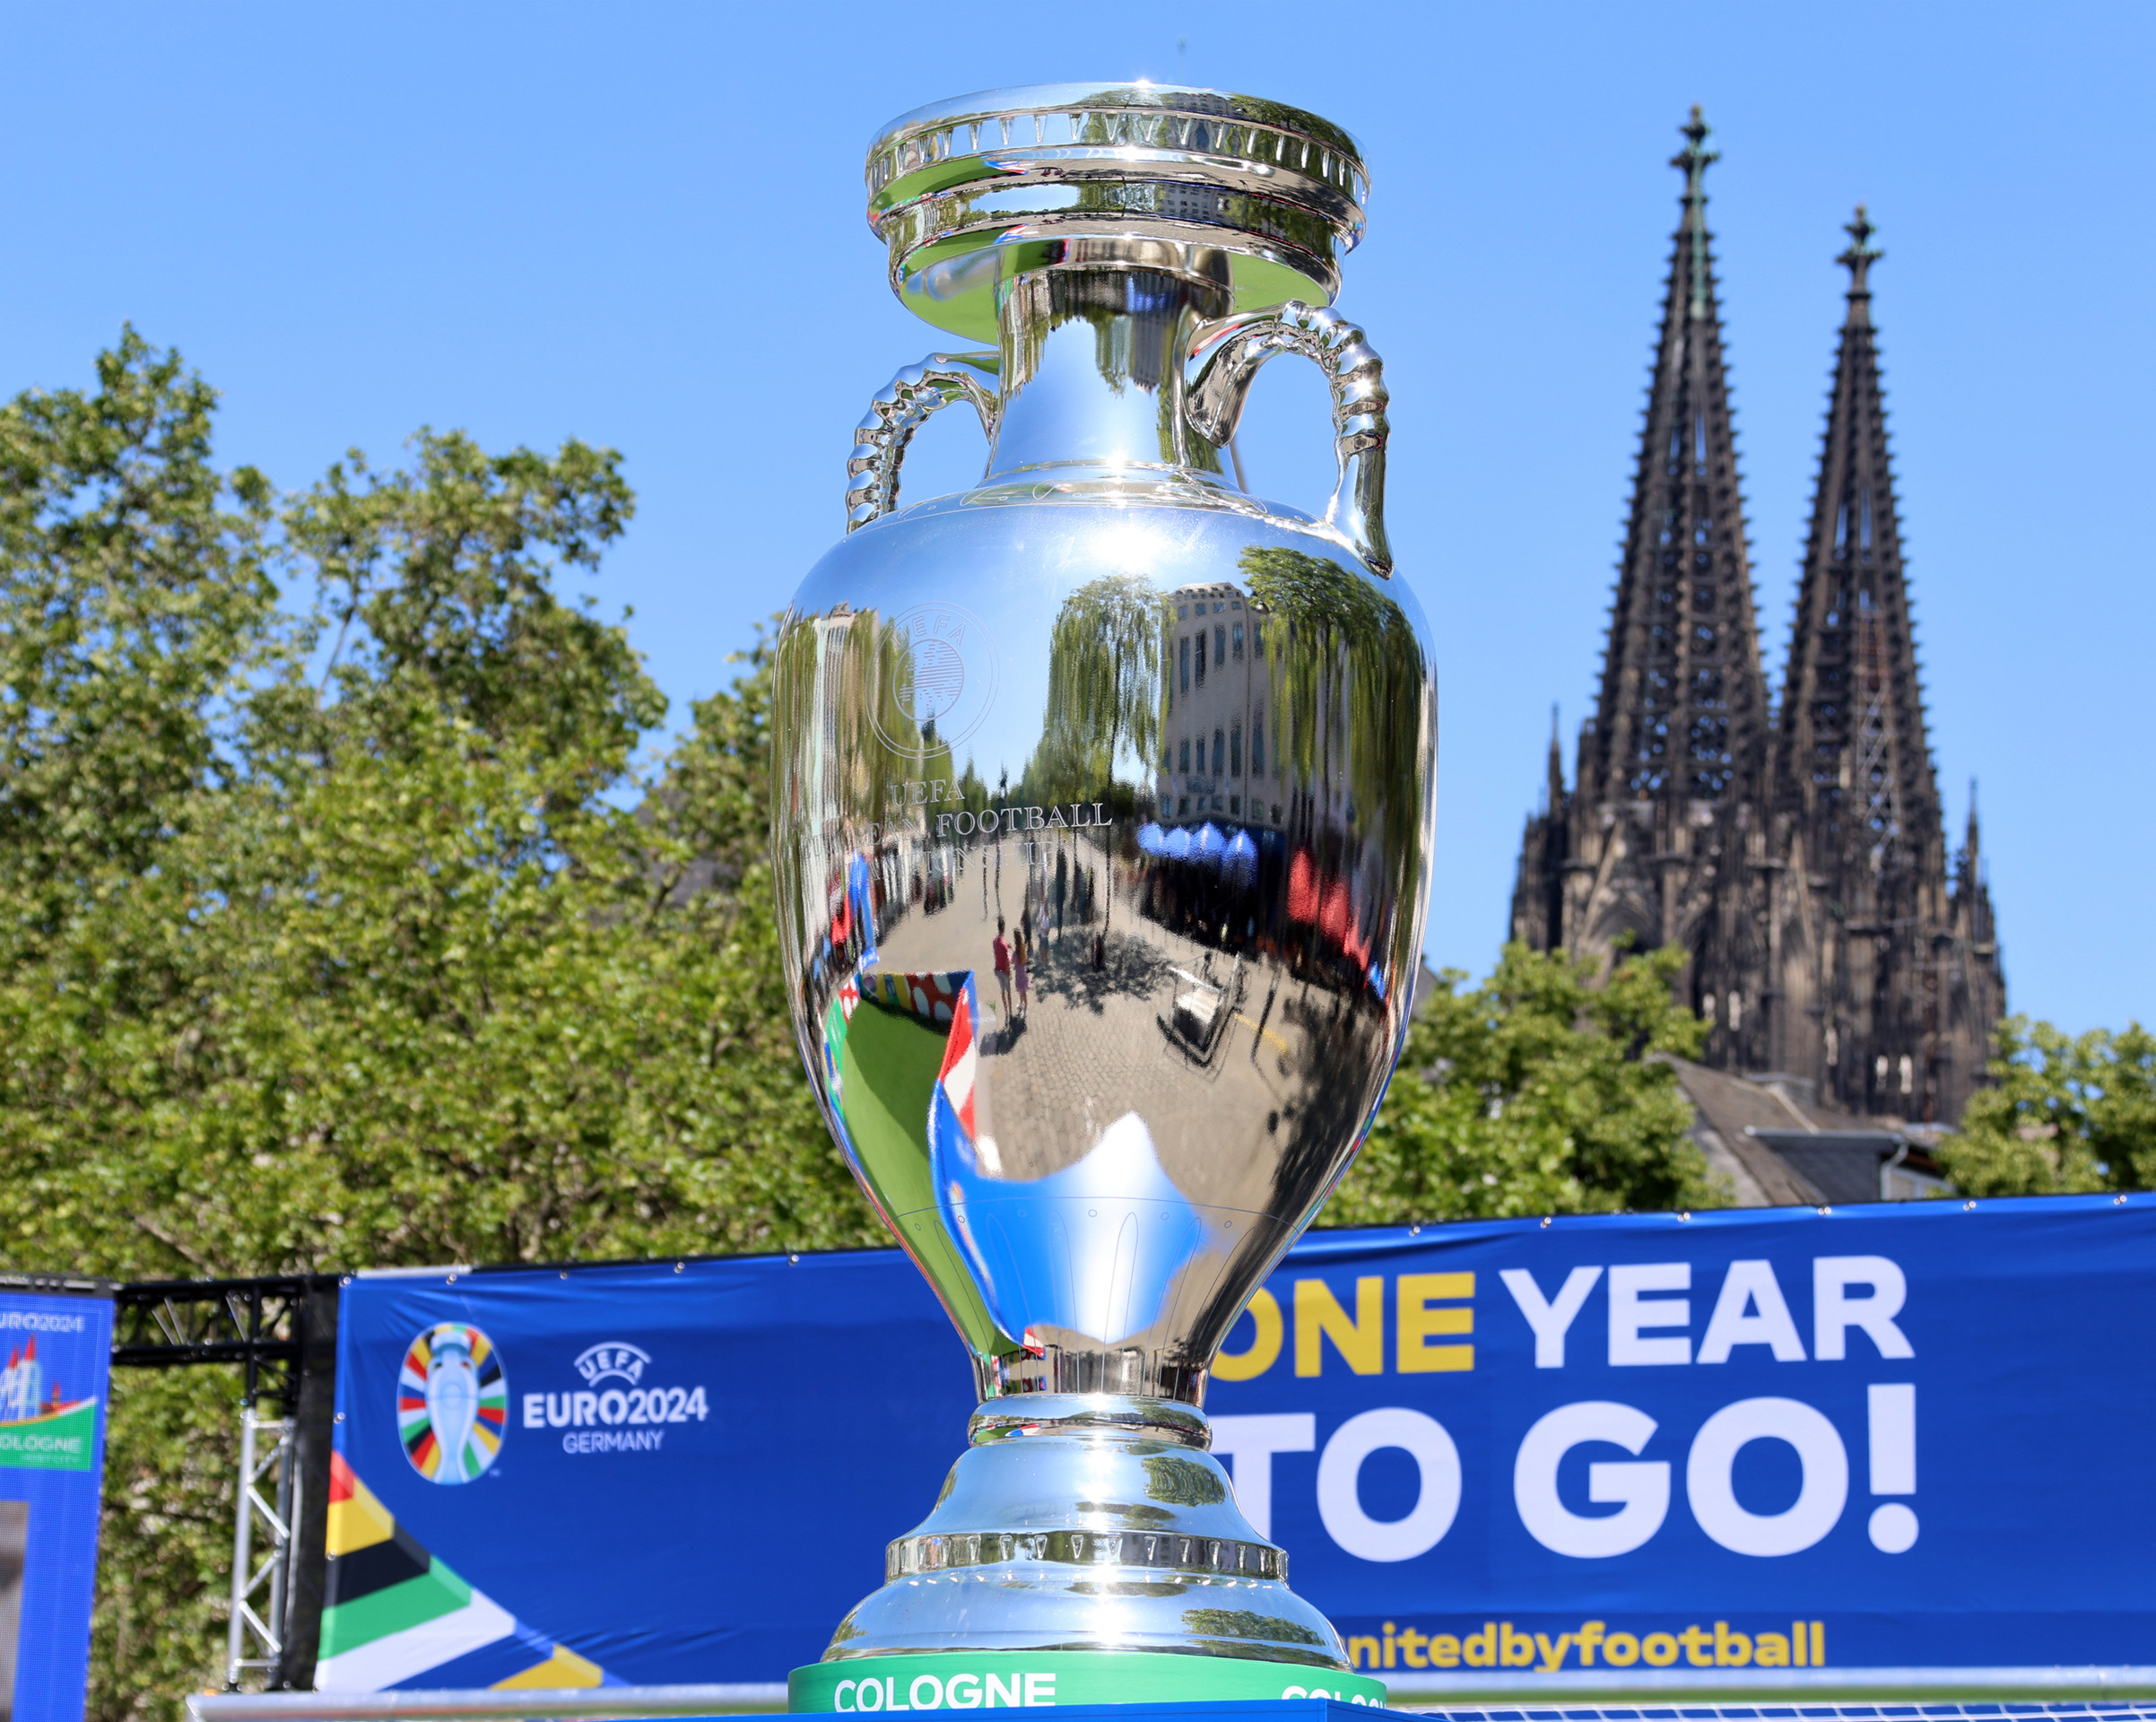 UEFA EURO 2024 in Cologne Cologne Tourism